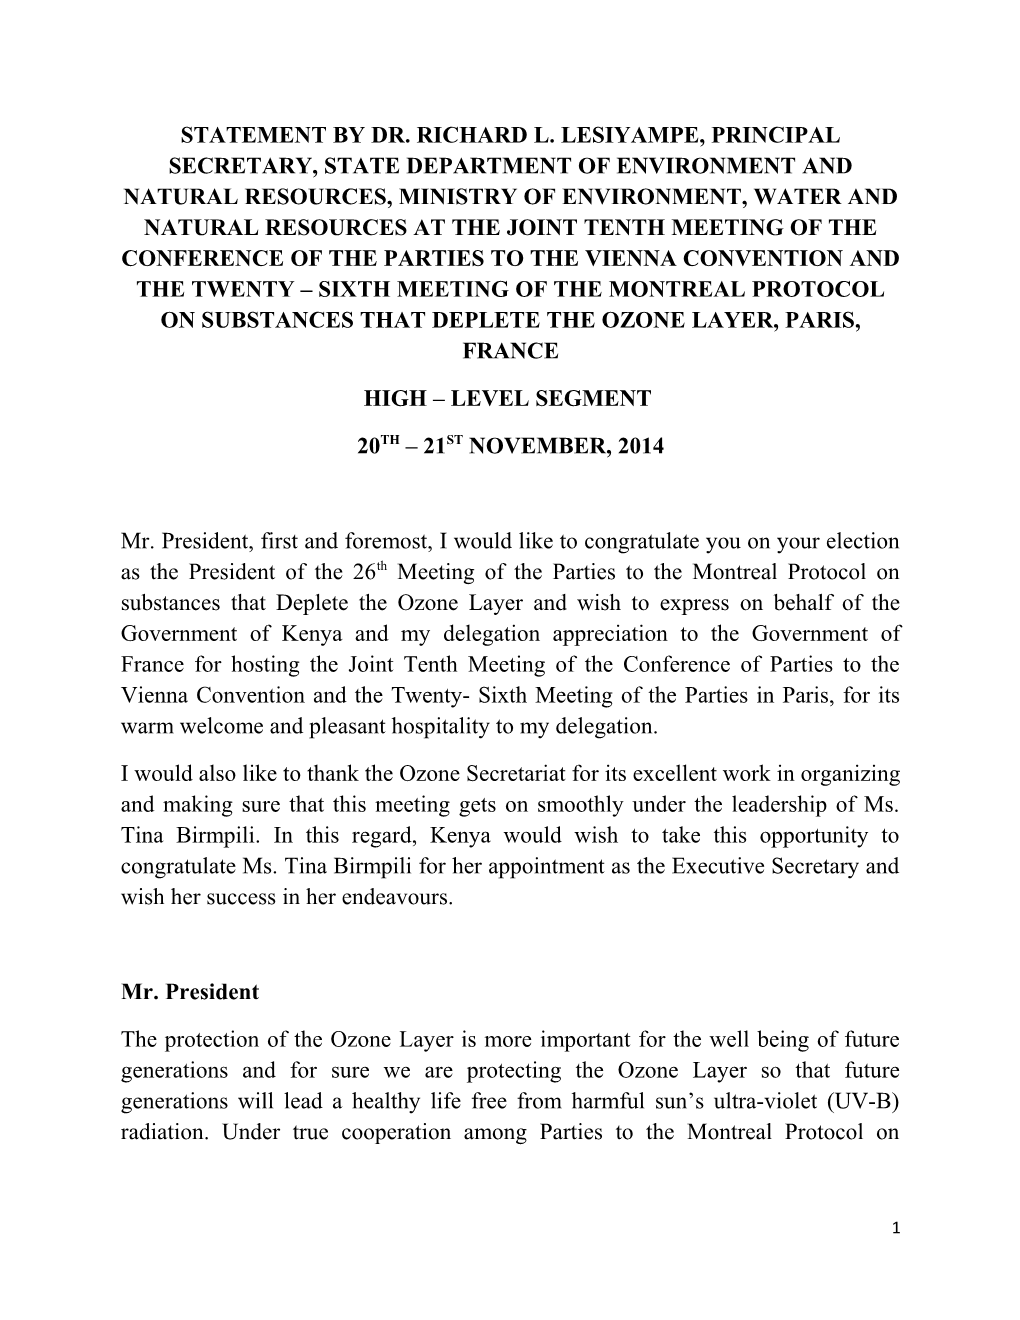 Statement by Dr. Richard L. Lesiyampe, Principal Secretary, State Department of Environment